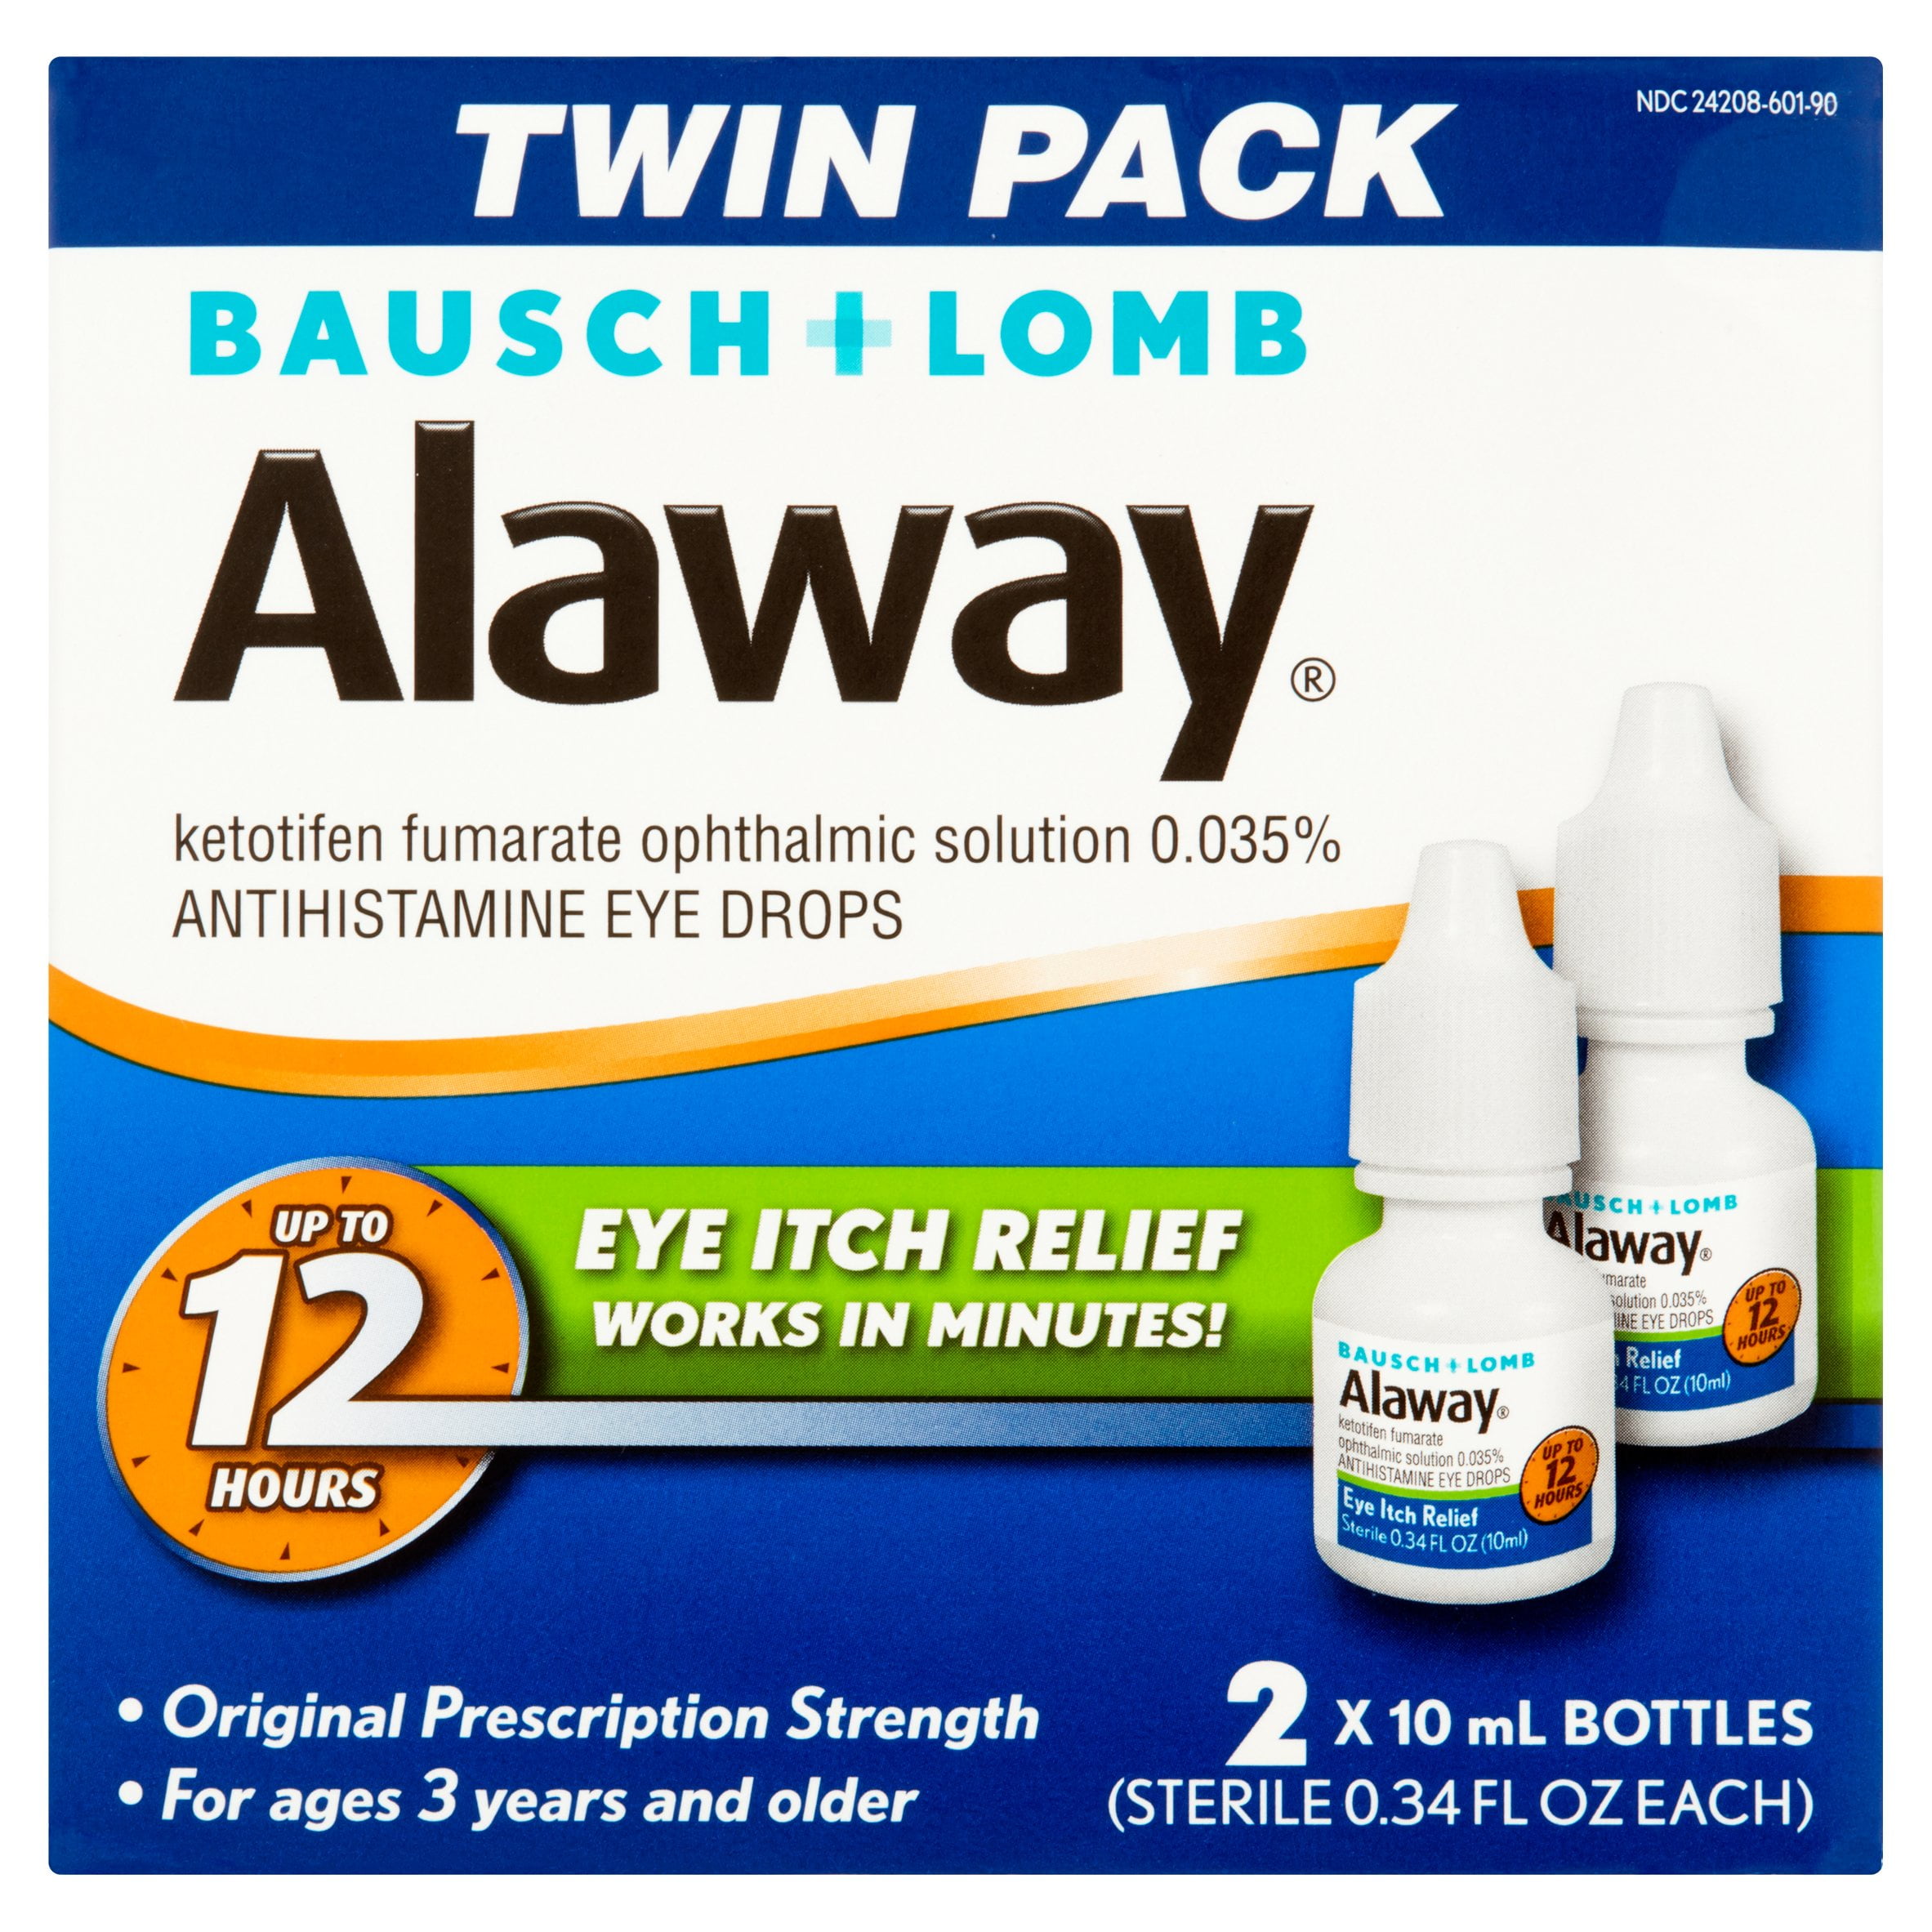 Bausch + Lomb Alaway Antihistamine Eye Drops Twin Pack, 0.34 fl oz, 2